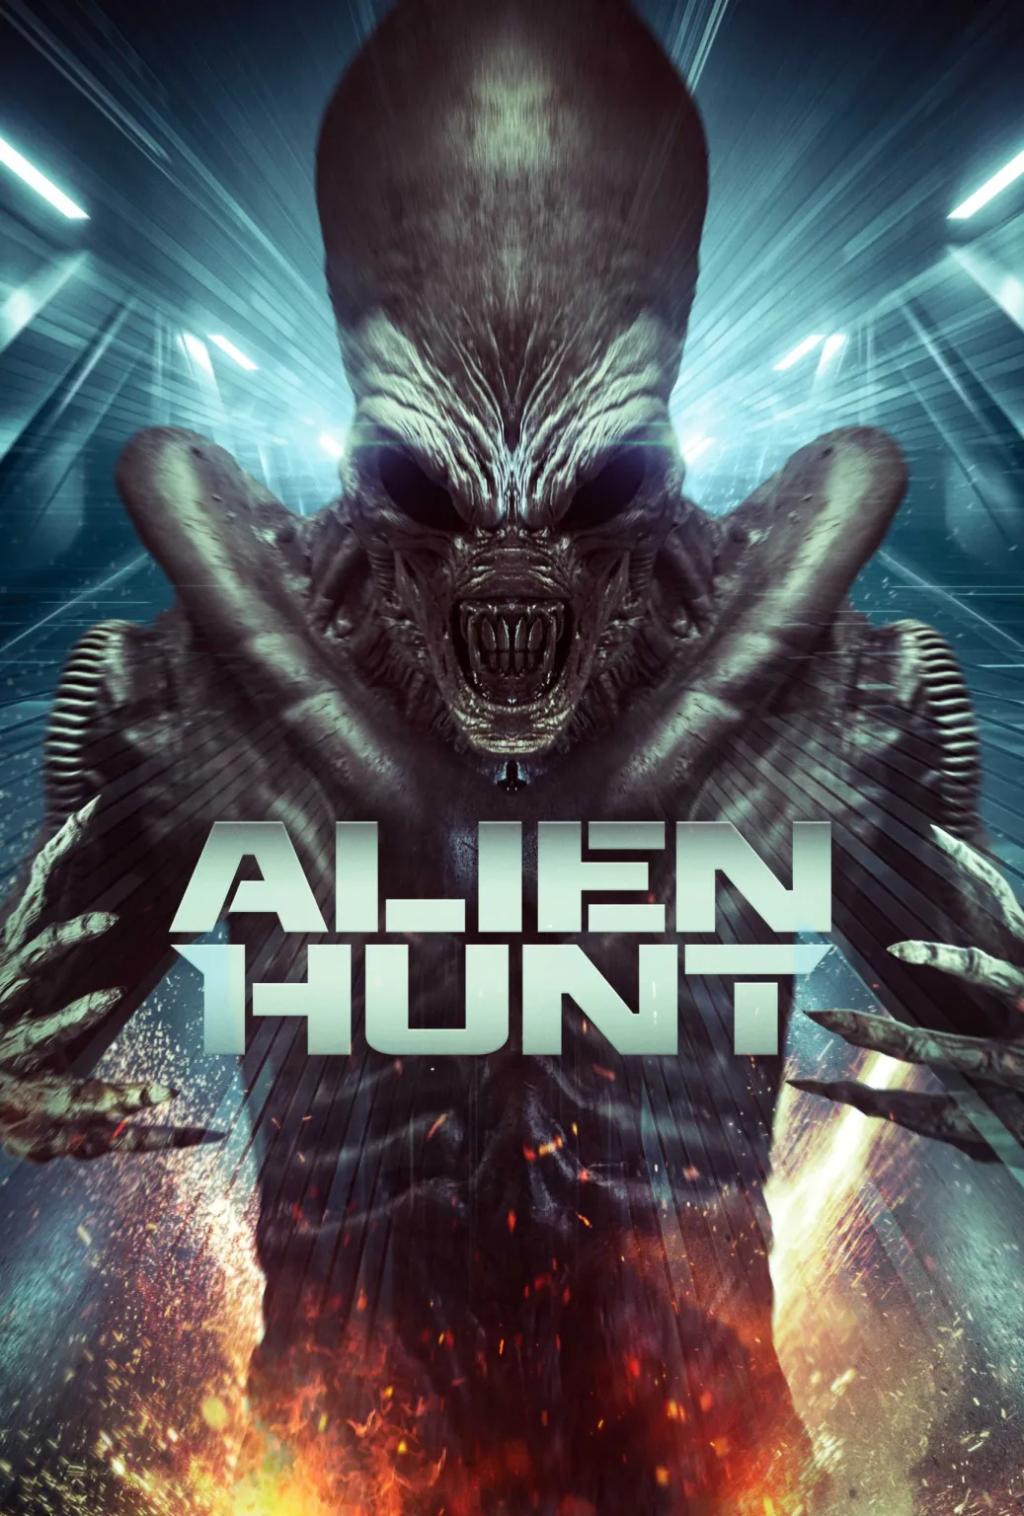 Alien-Hunt-Artwork-scaled.webp.jpg